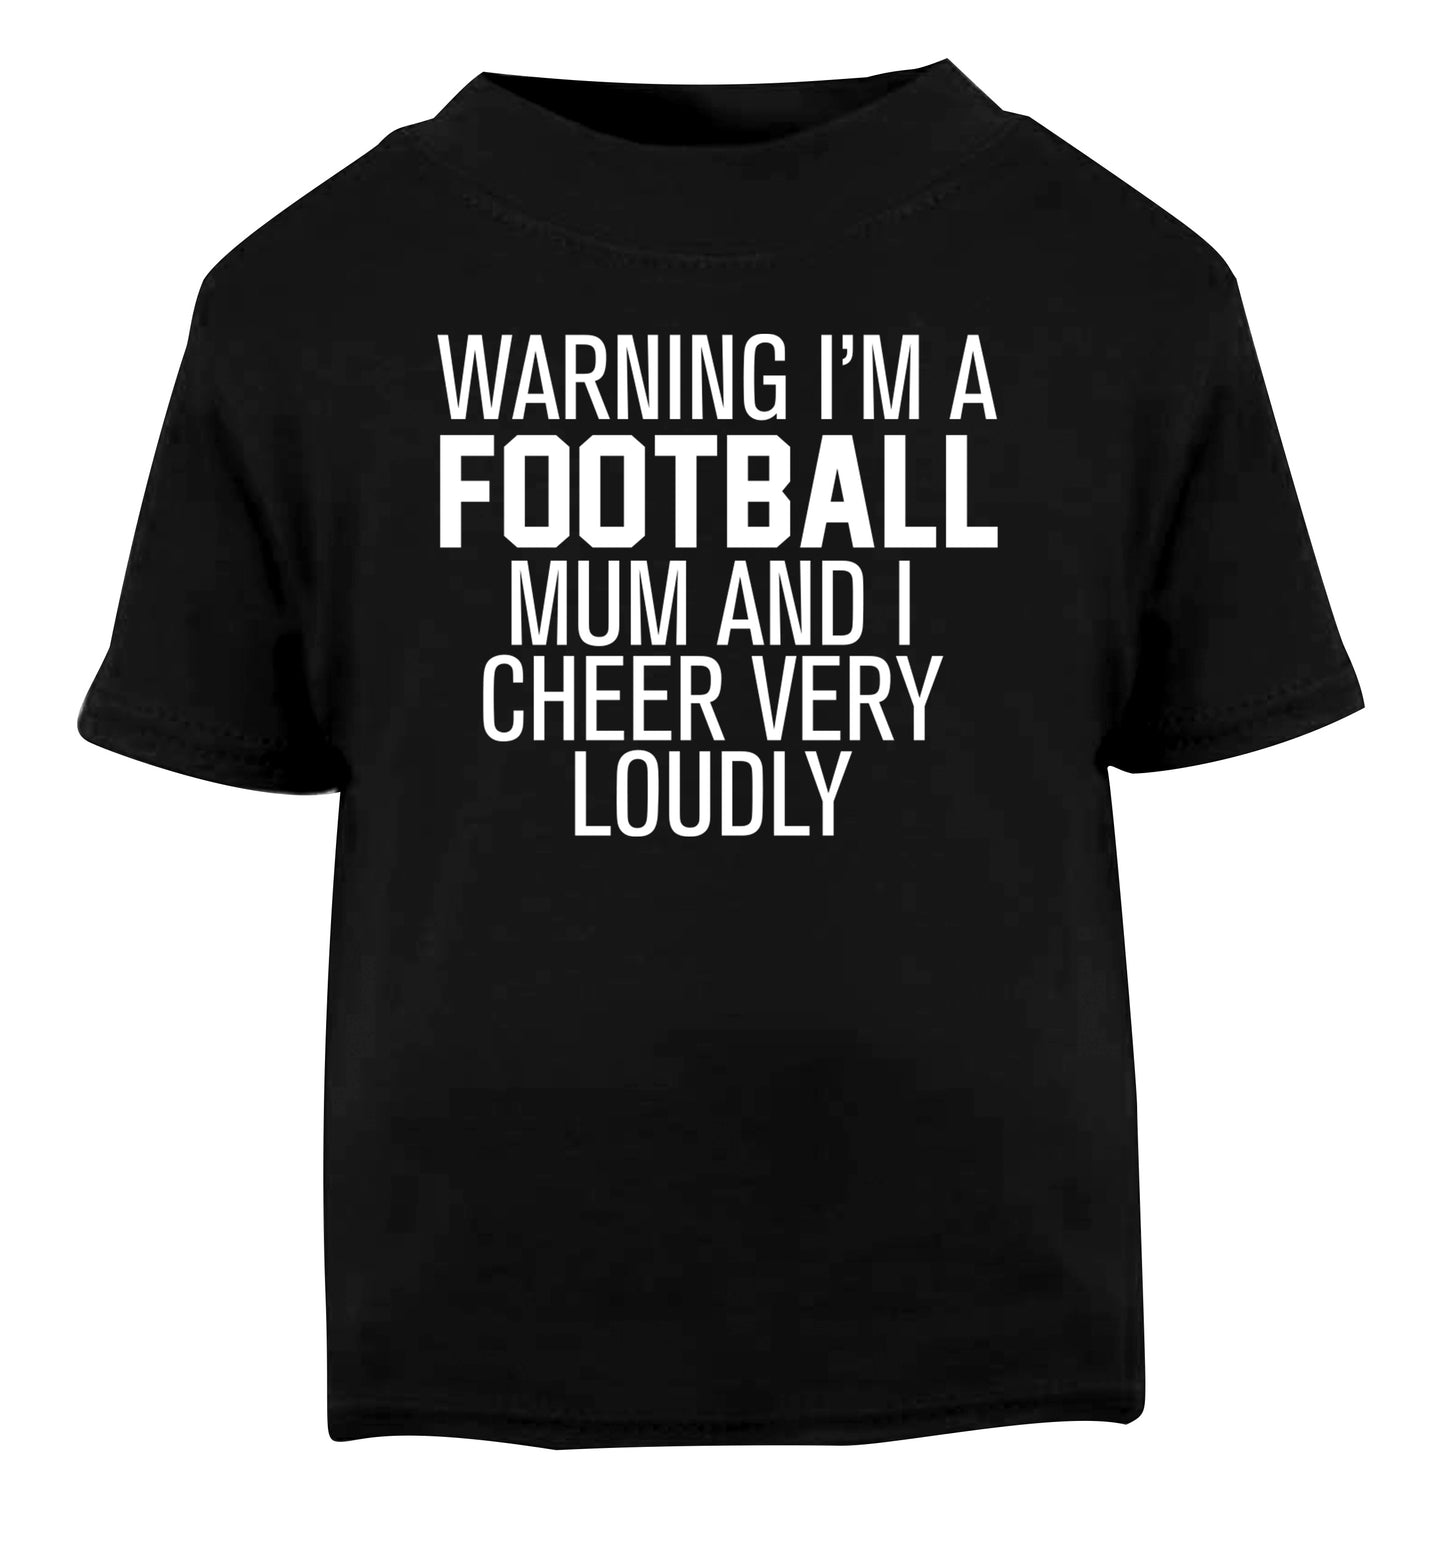 Warning I'm a football mum and I cheer very loudly Black Baby Toddler Tshirt 2 years